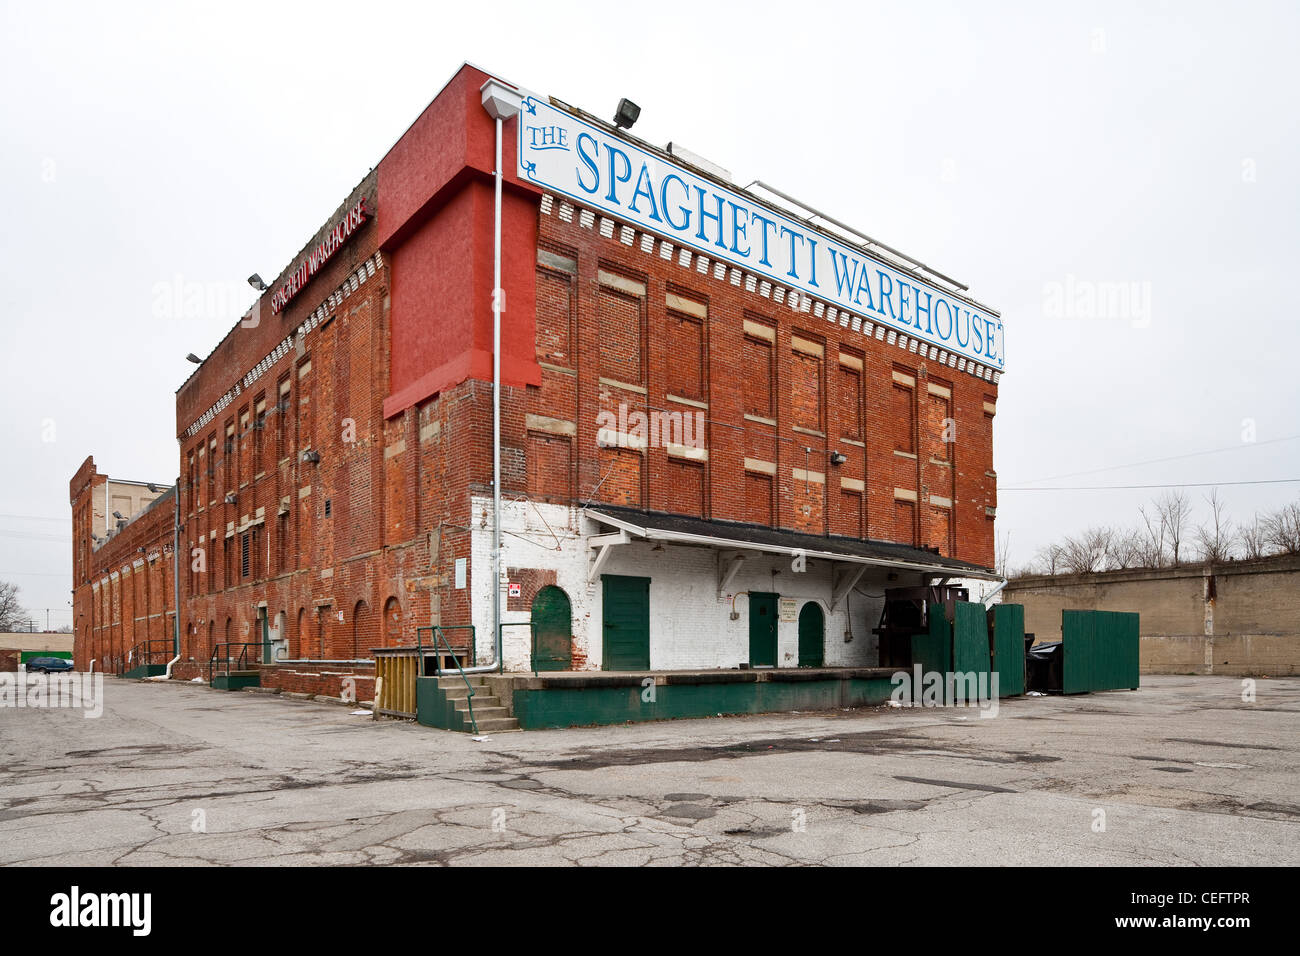 The Spaghetti Warehouse located in Columbus Ohio Stock Photo